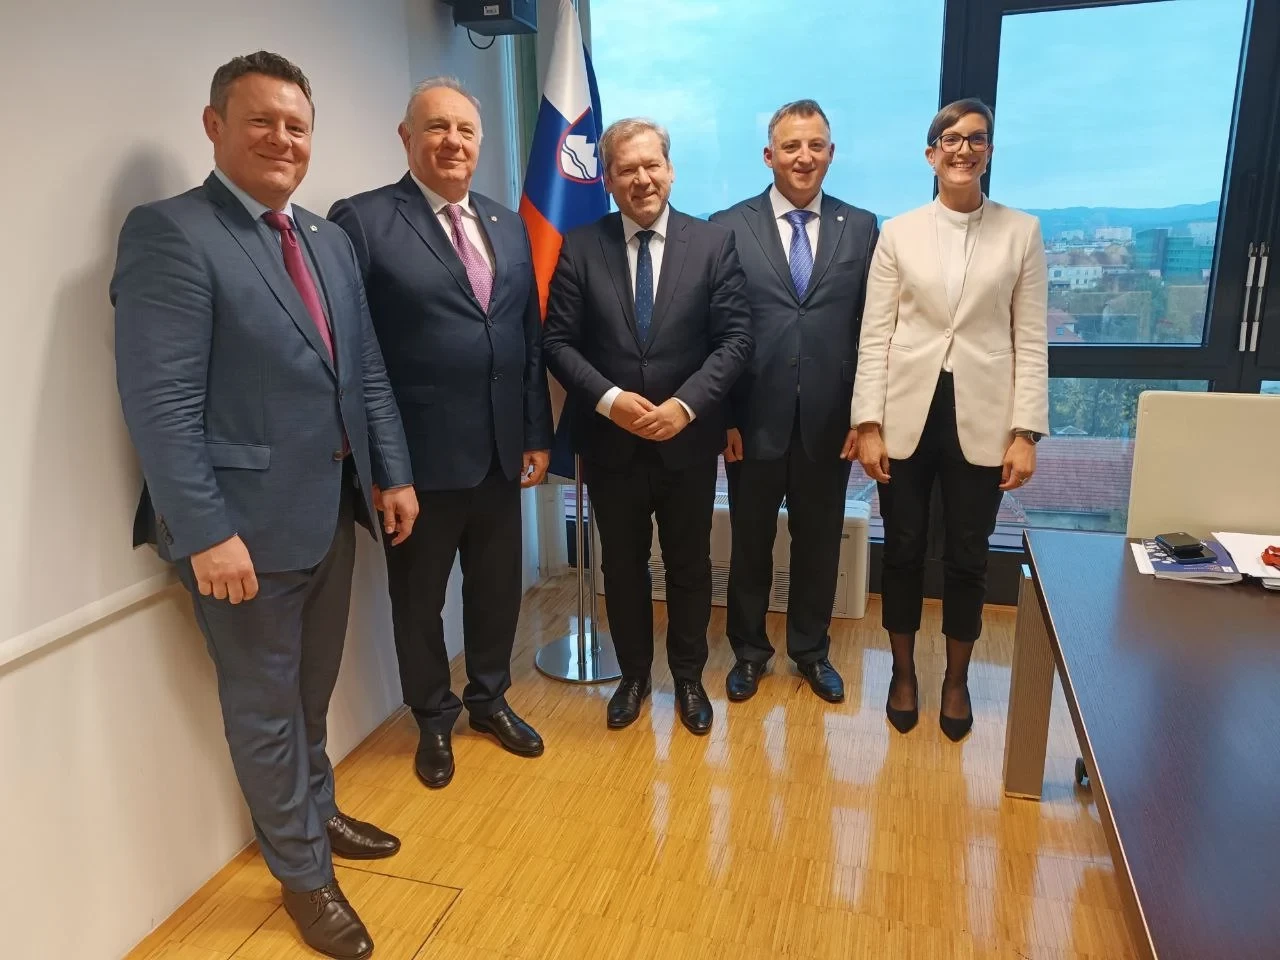 EJU President Tóth prepares for Congress in Ljubljana with two-day visit